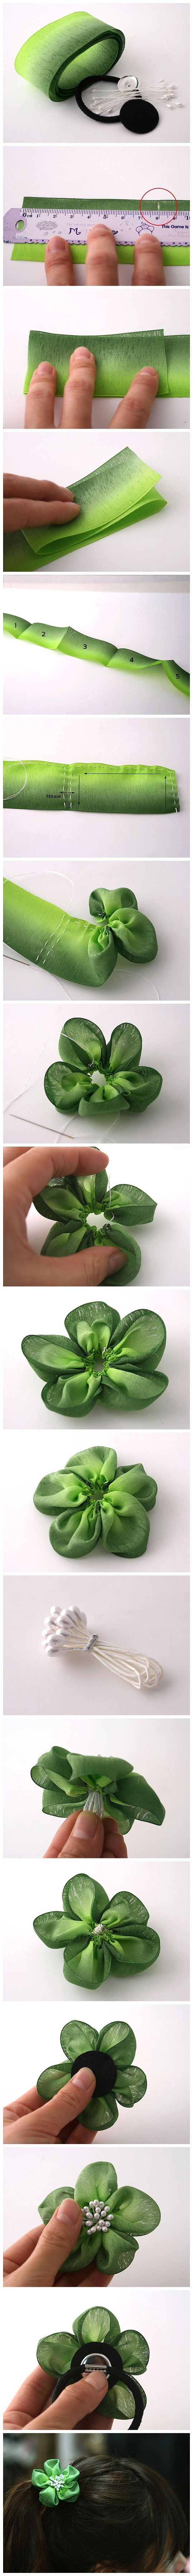 DIY fabric flower